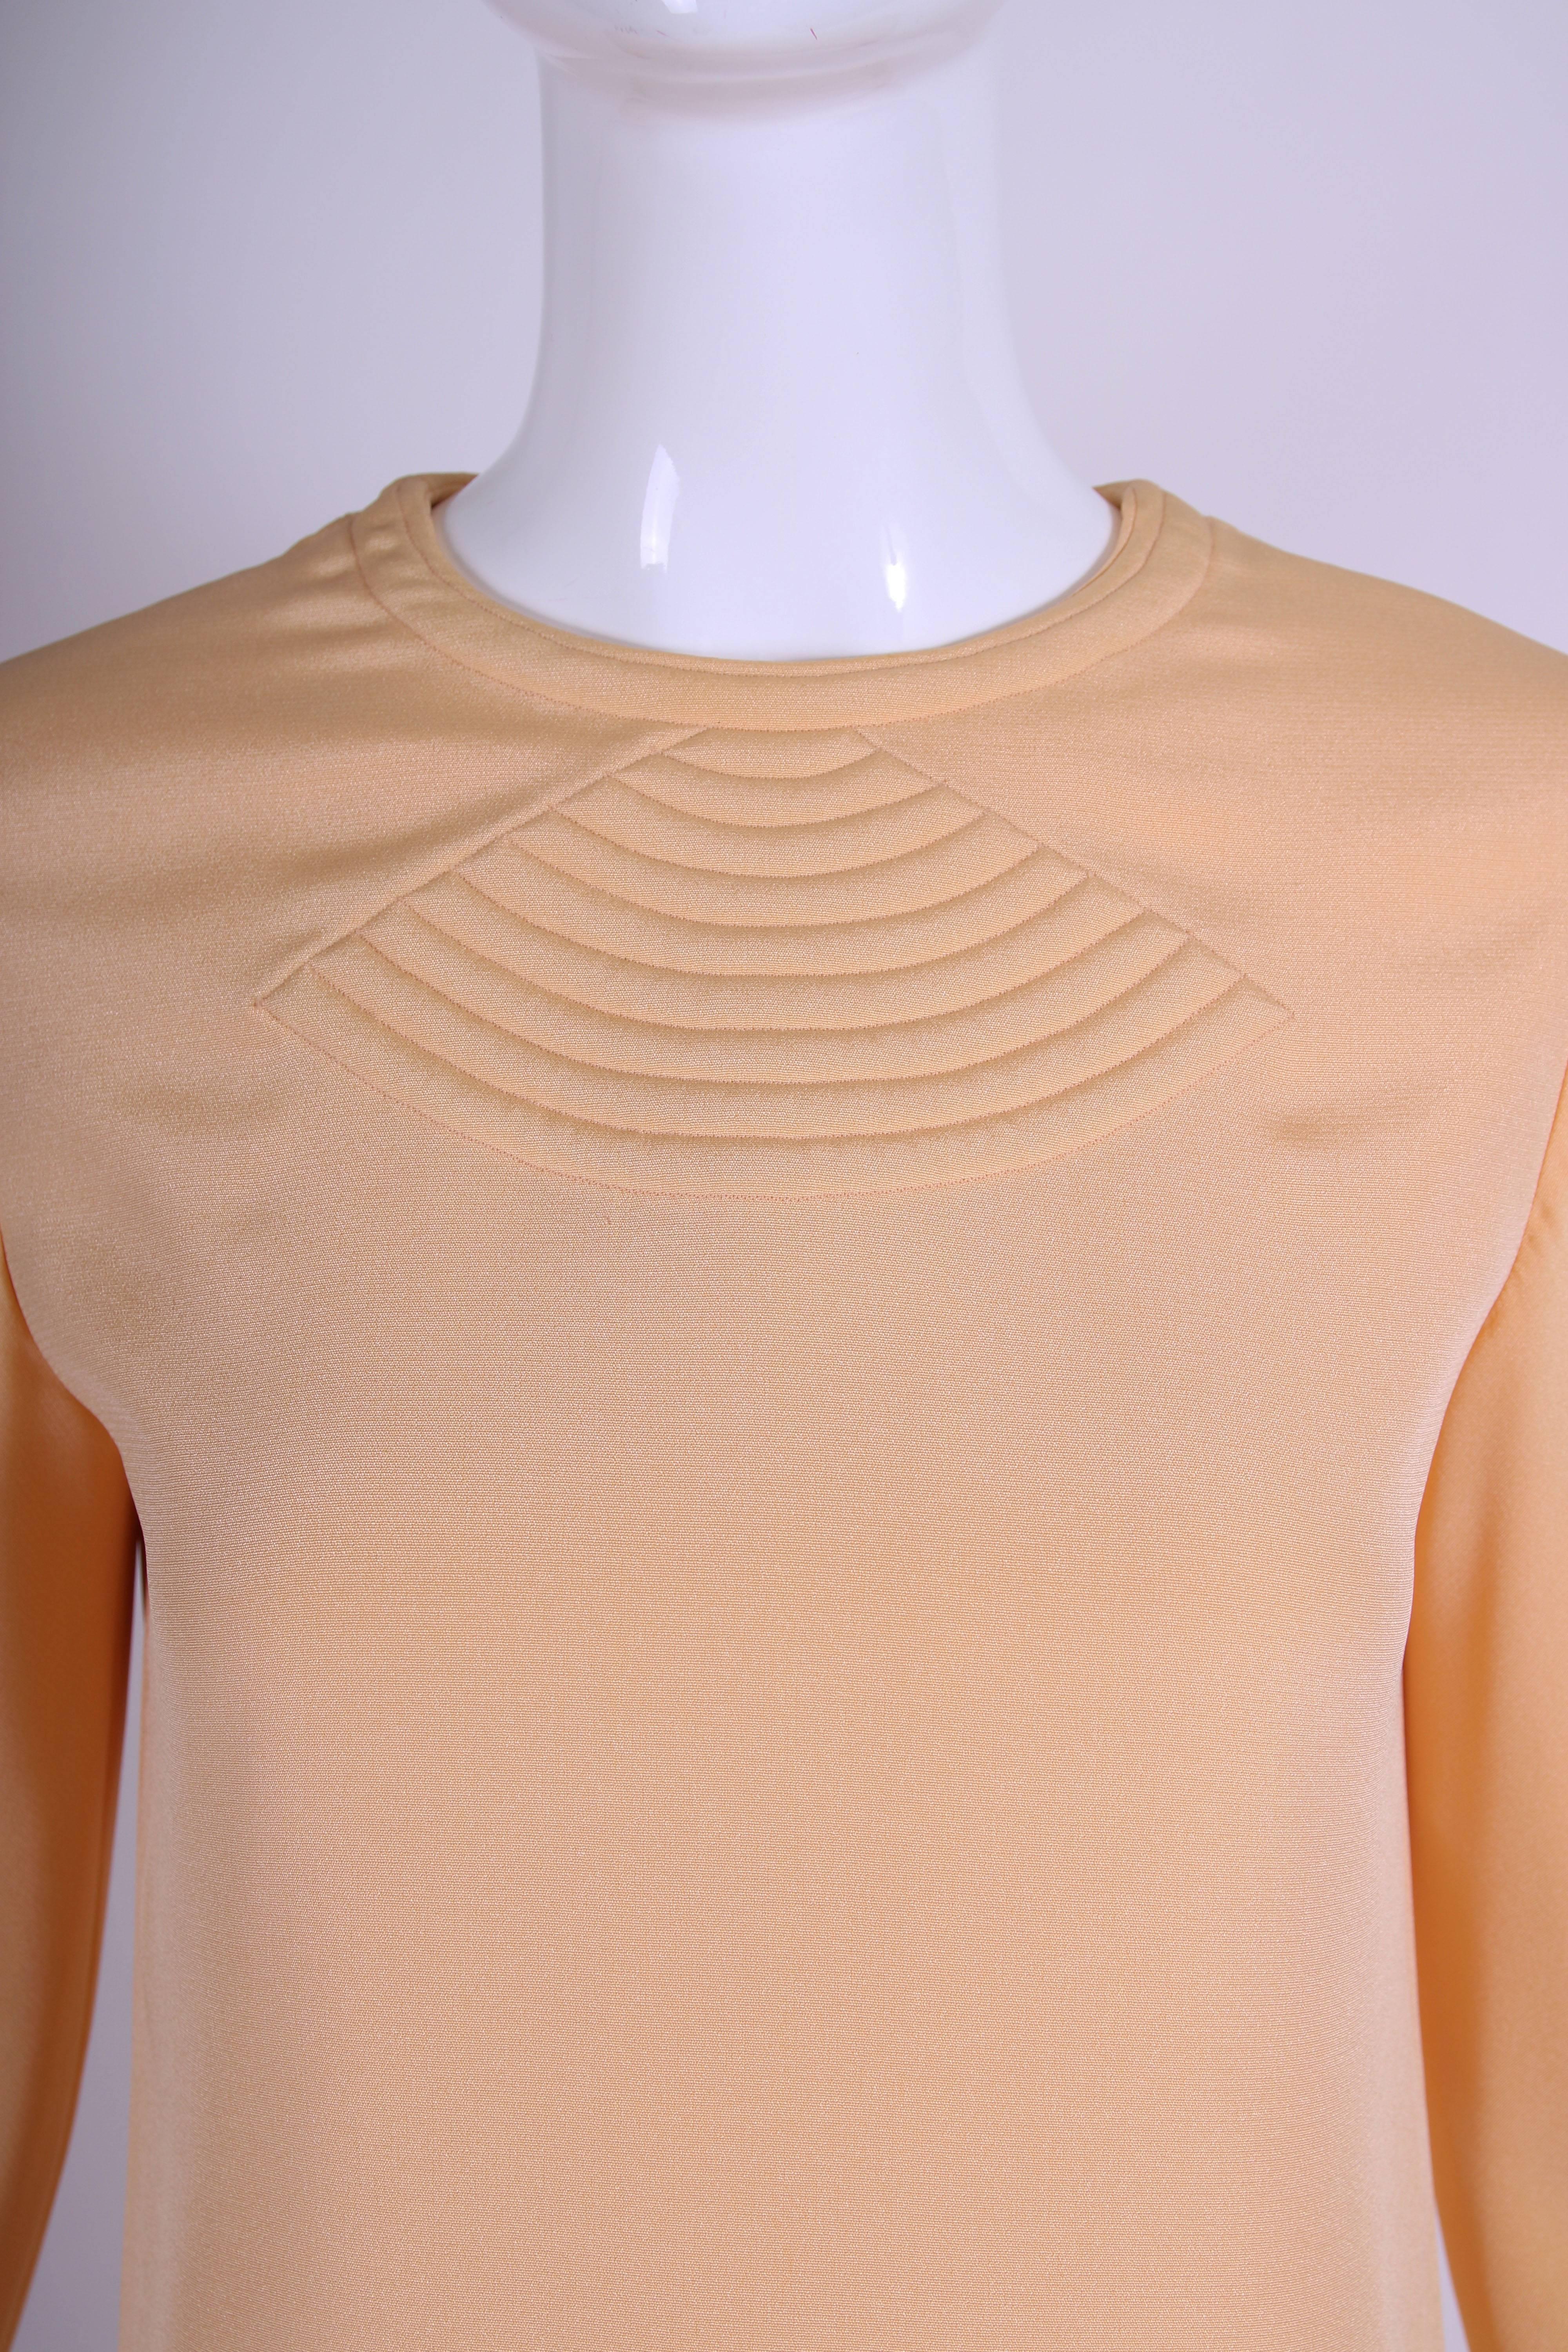 Pierre Cardin Mod Space Age Mini Dress with Geometric Design, 1970s  For Sale 1